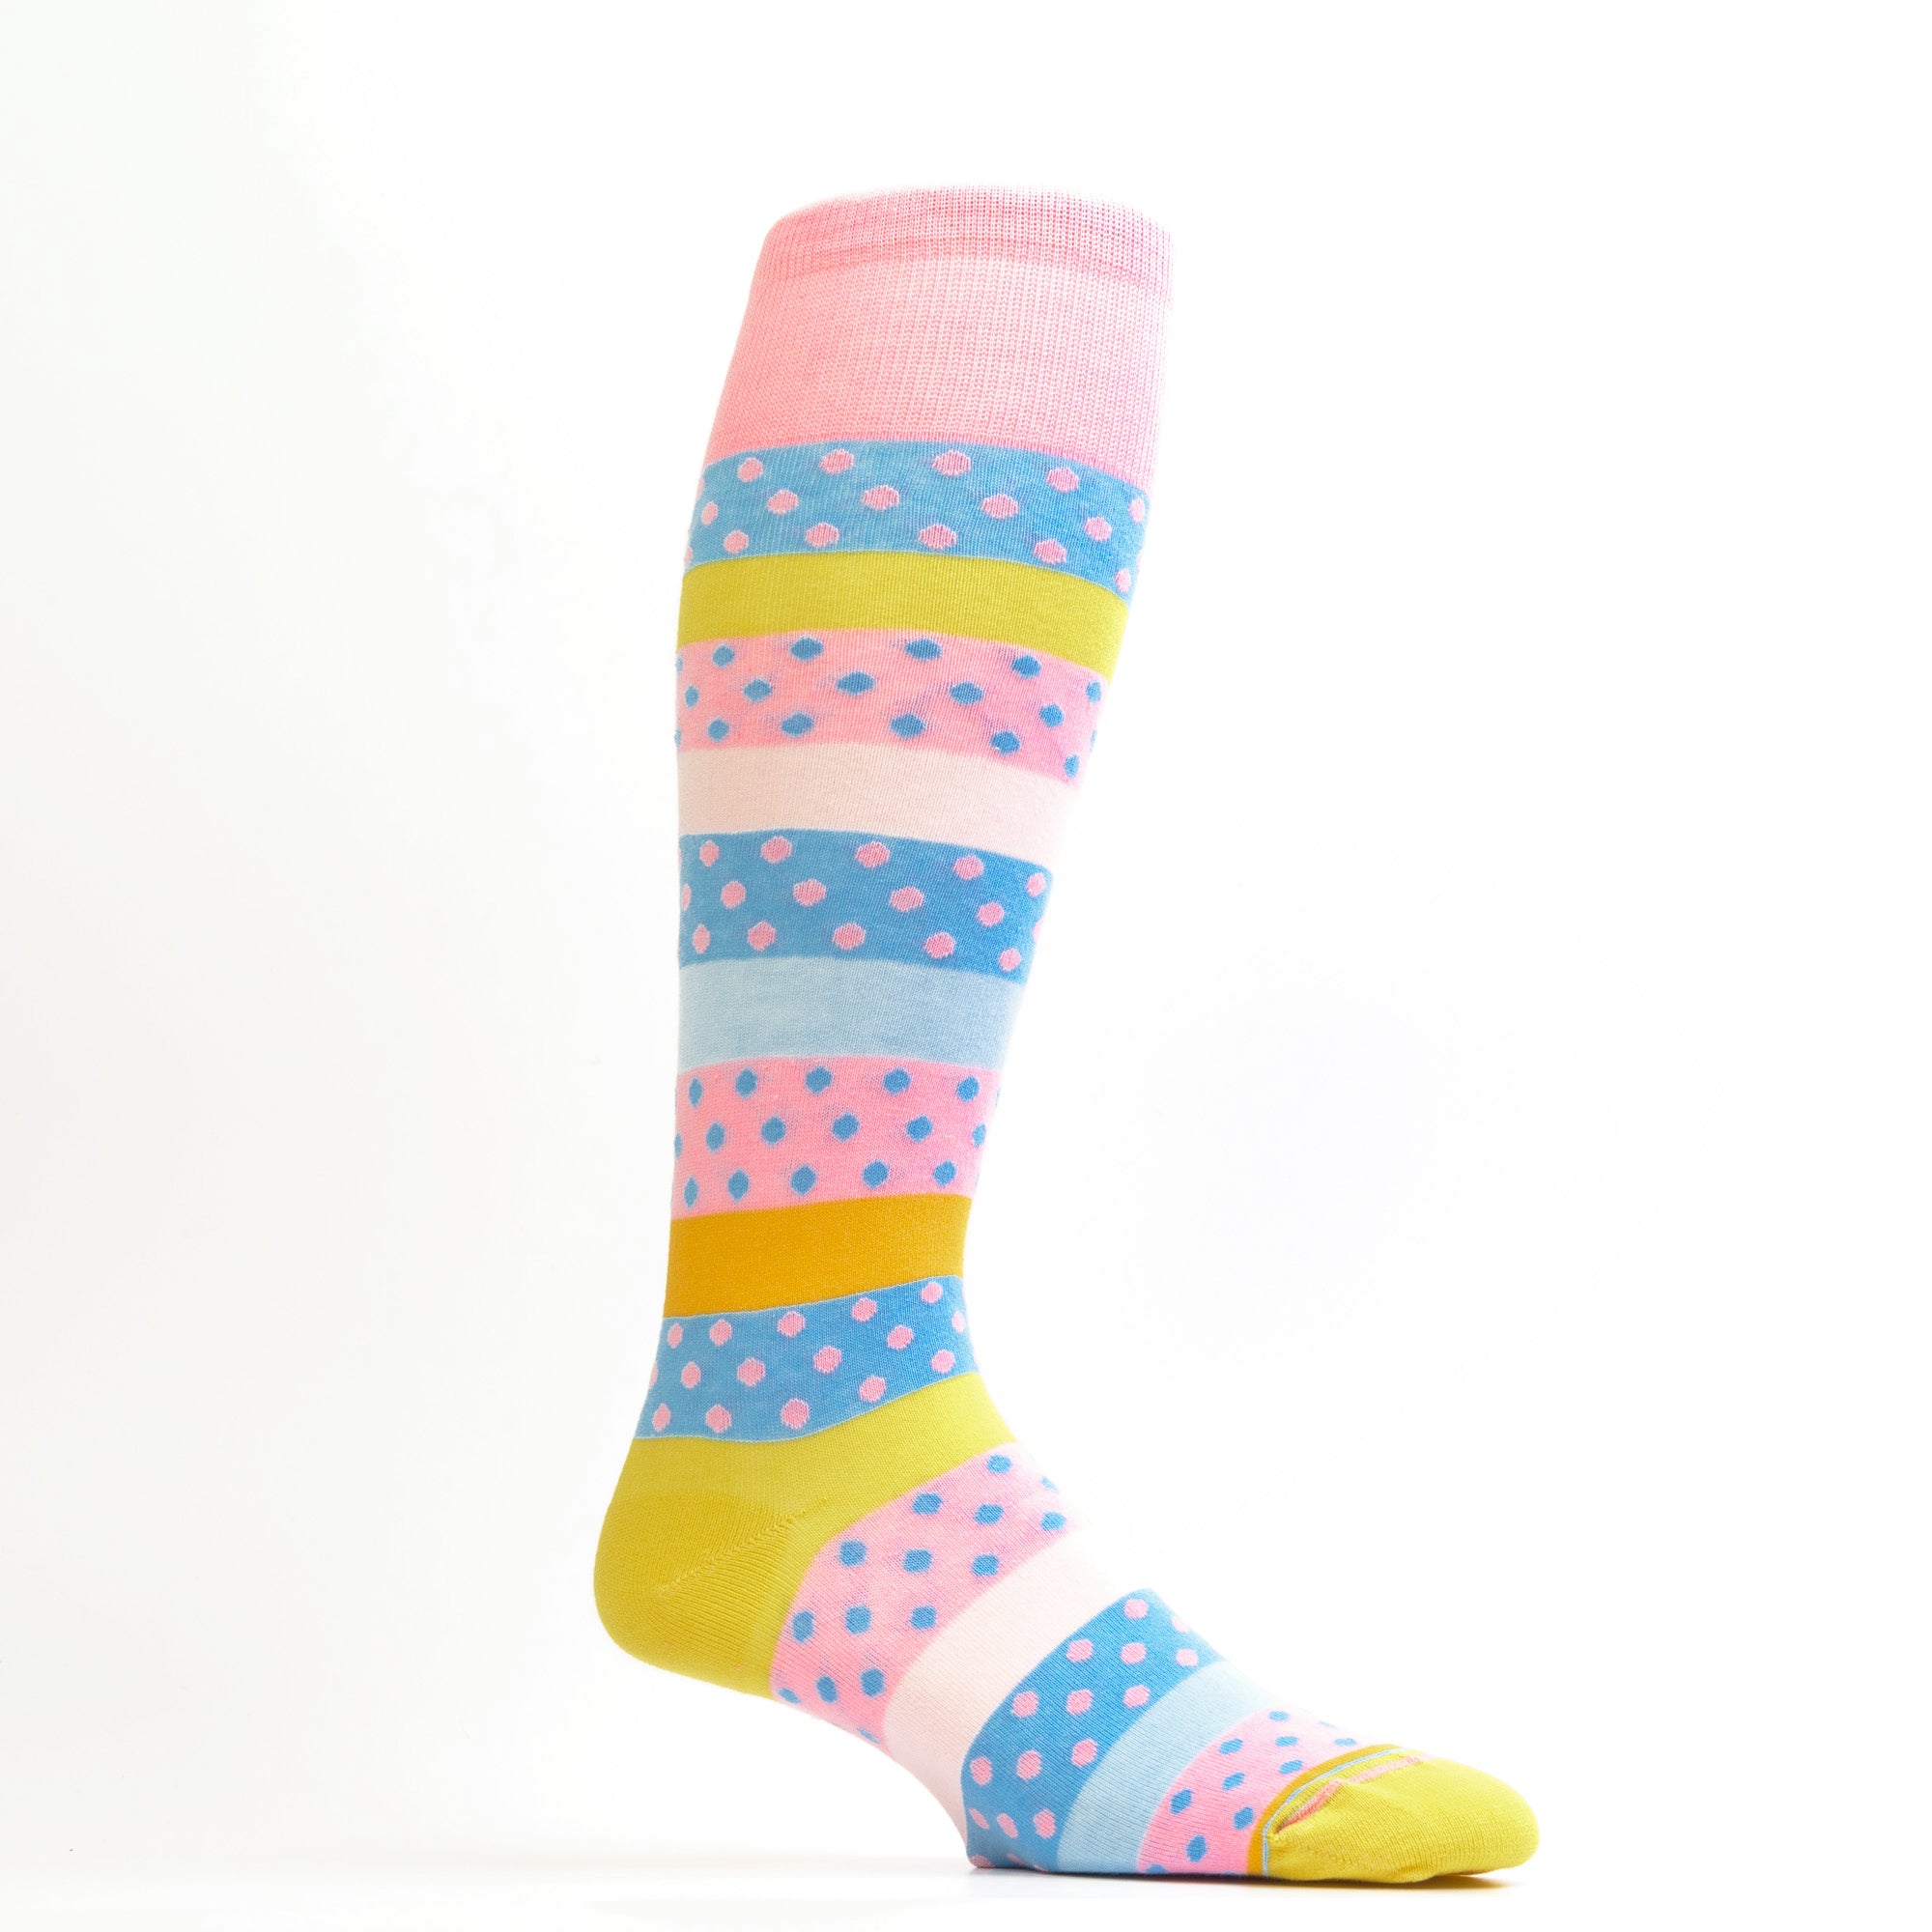 Socks Women Polka Dots, Yellow Polka Dots Socks, Polka Dot Mens Socks